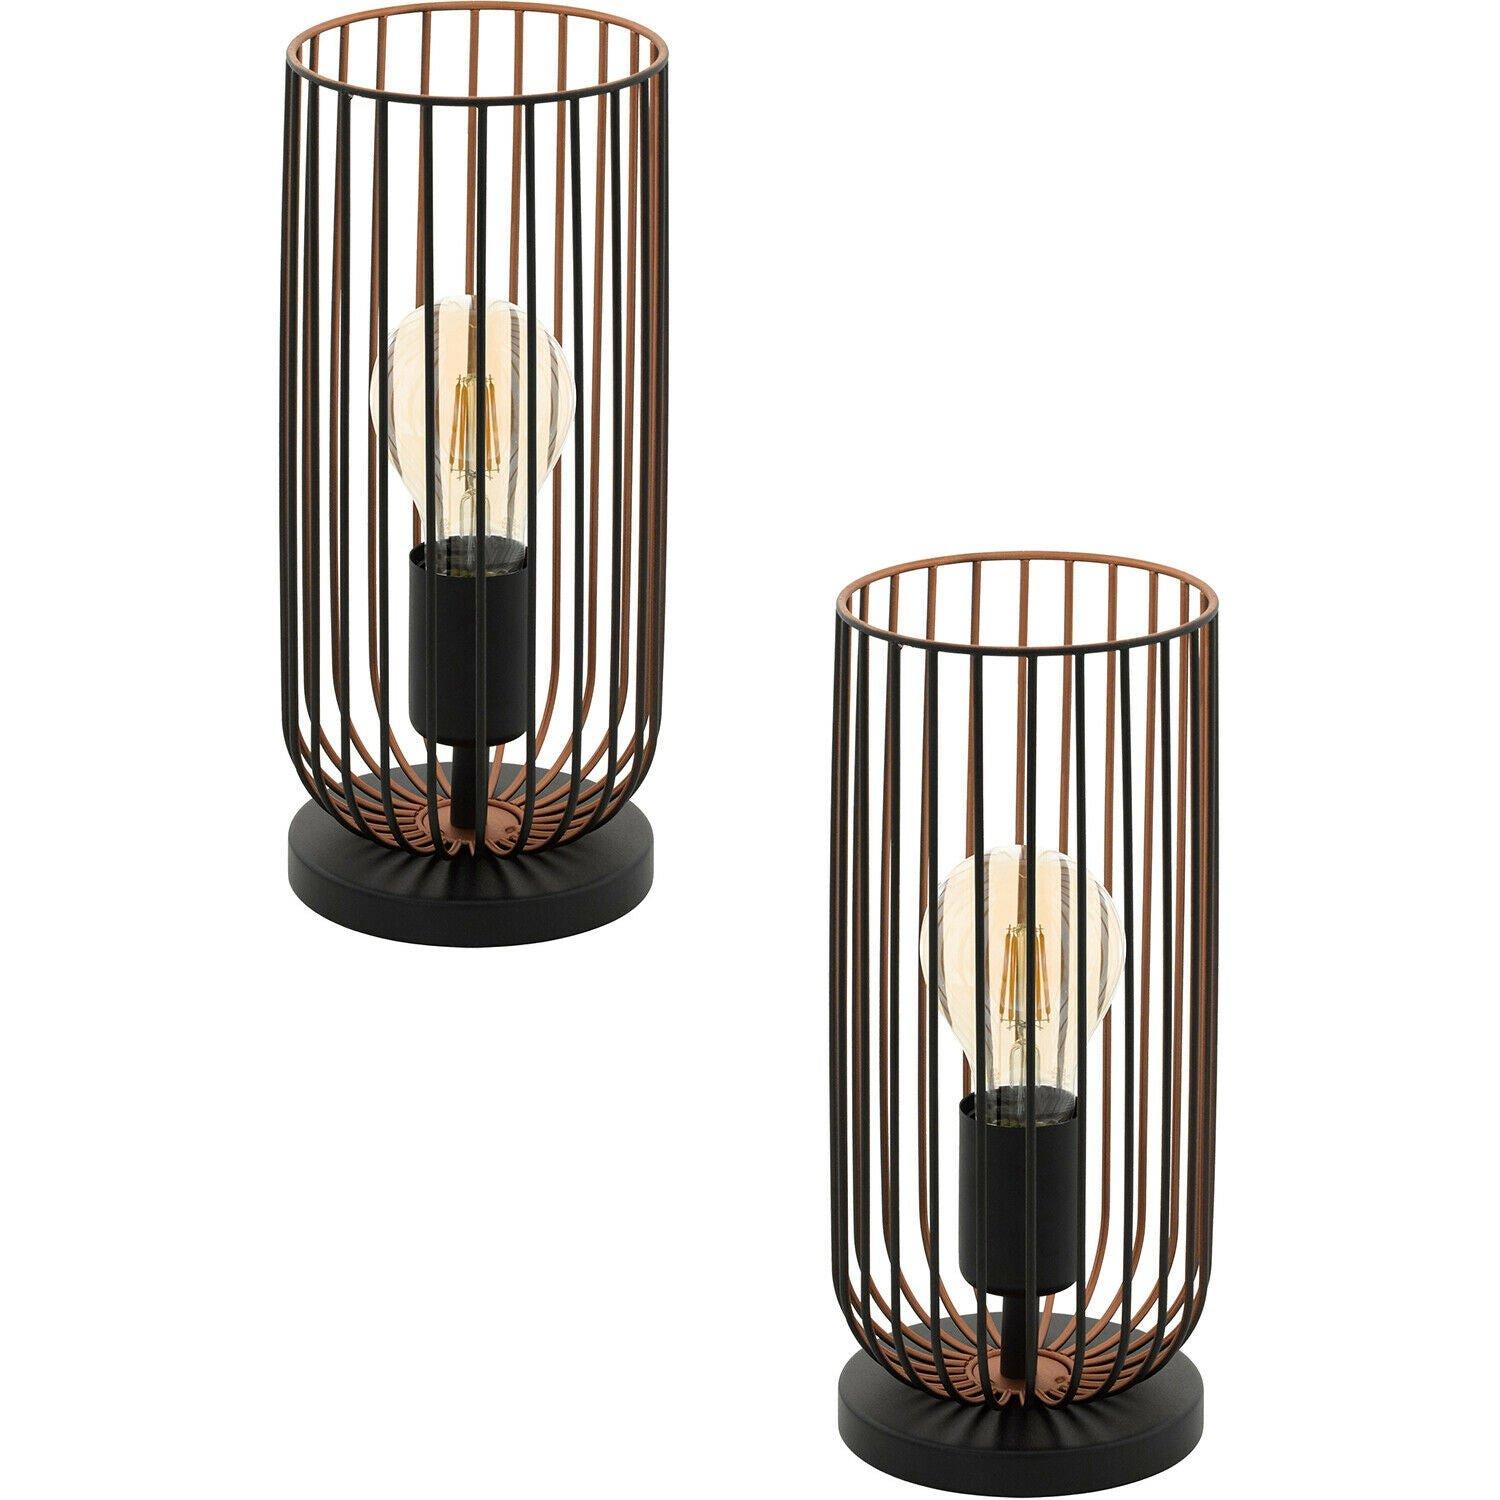 2 PACK Small Table Lamp Desk Light Black & Copper Cage Shade 1x 60W E27